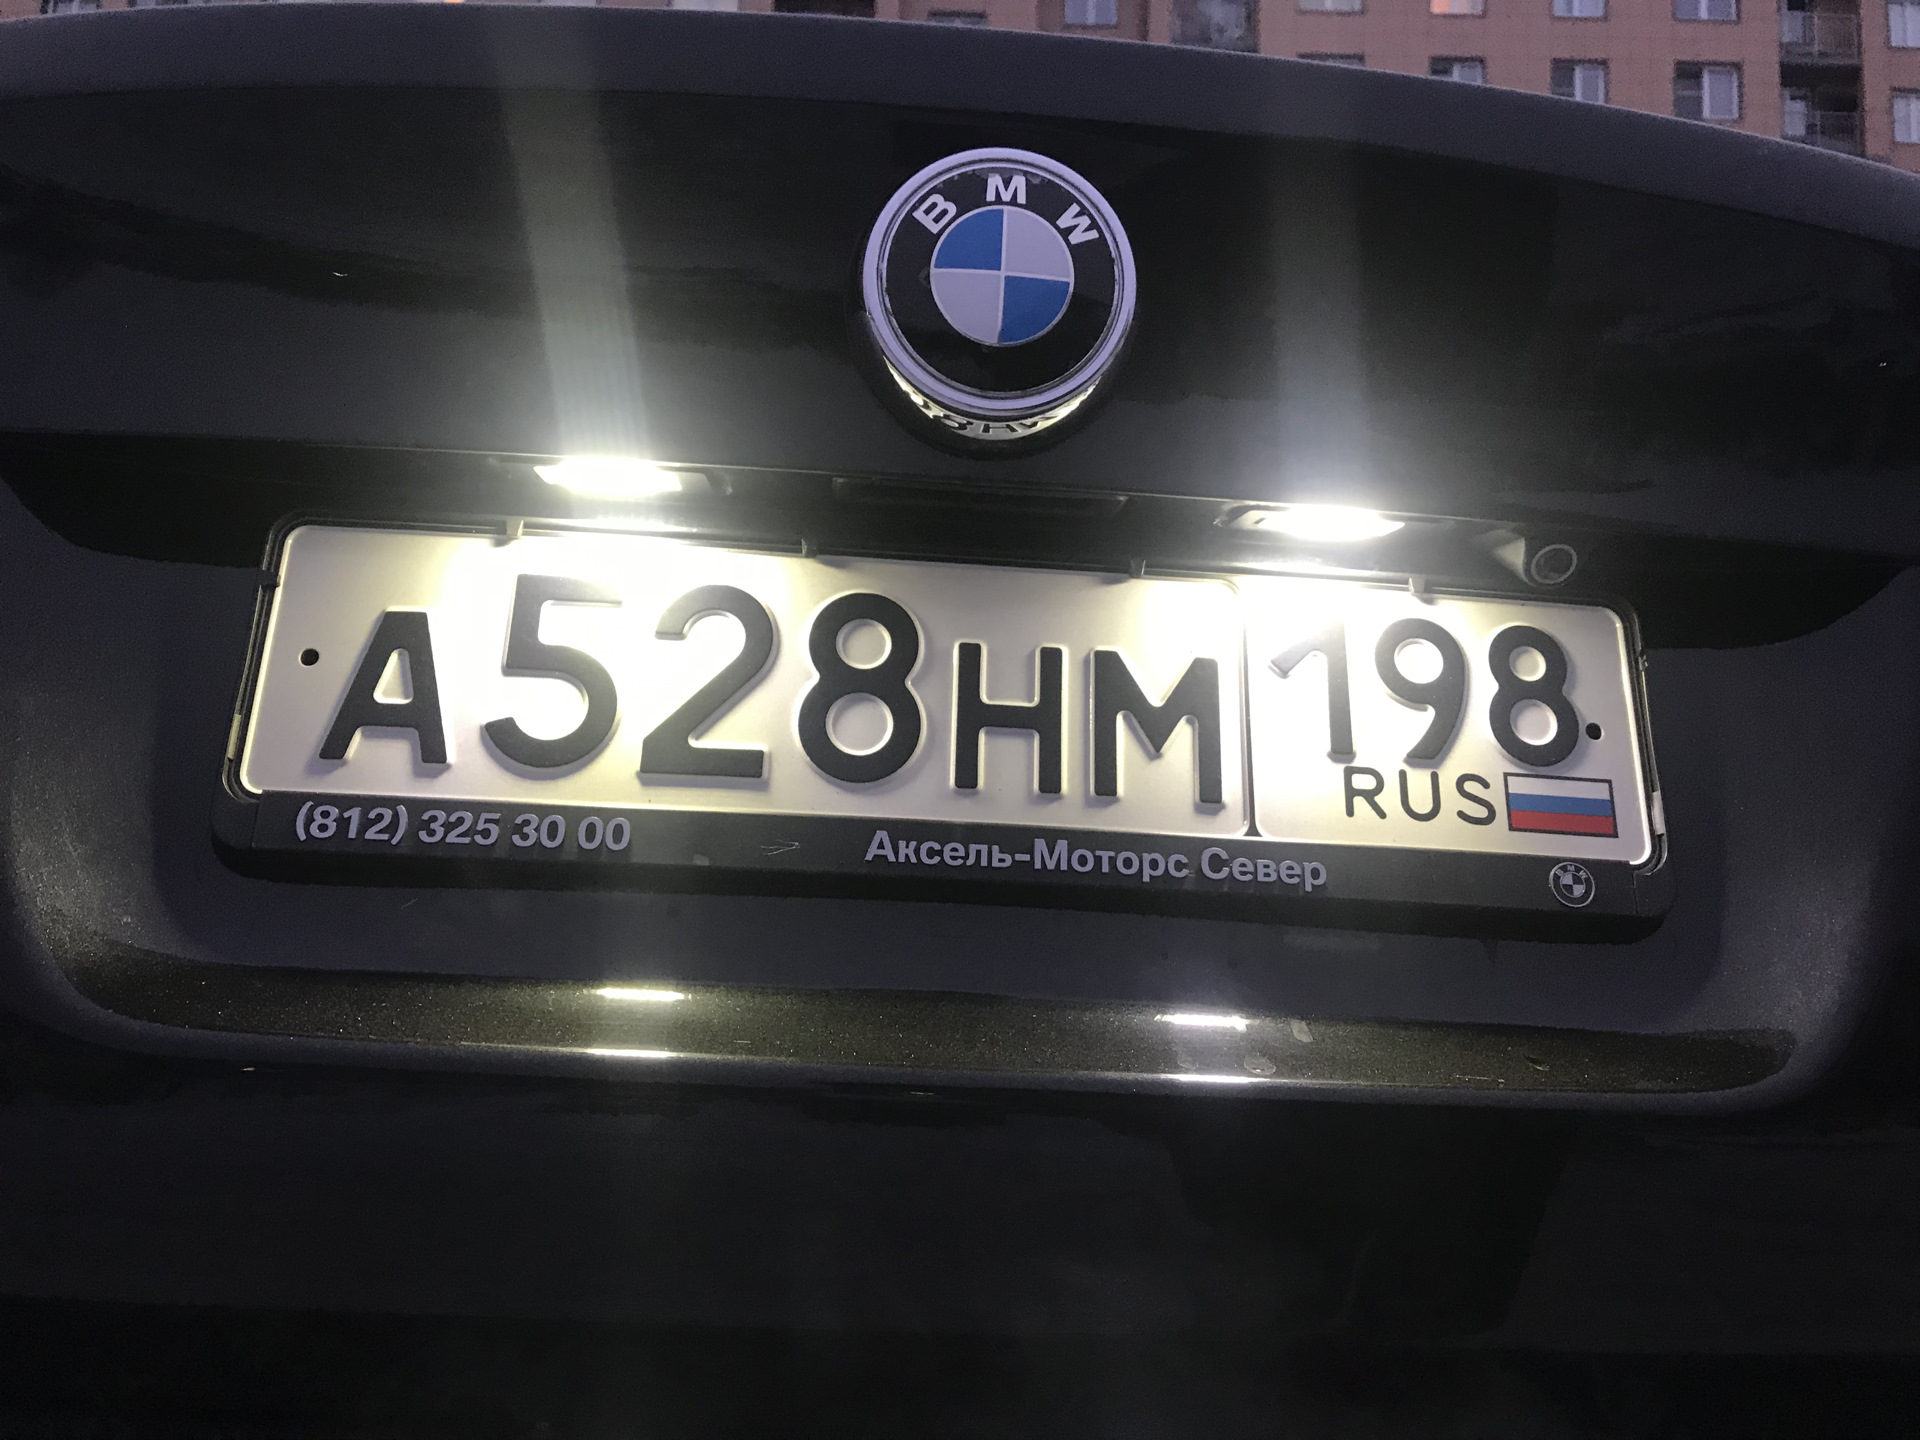 Регион санкт петербурга номер 52. BMW 1 подсветка номера. Номера на БМВ а305аа. BMW С номерами Питер. Номера на БМВ 3005.